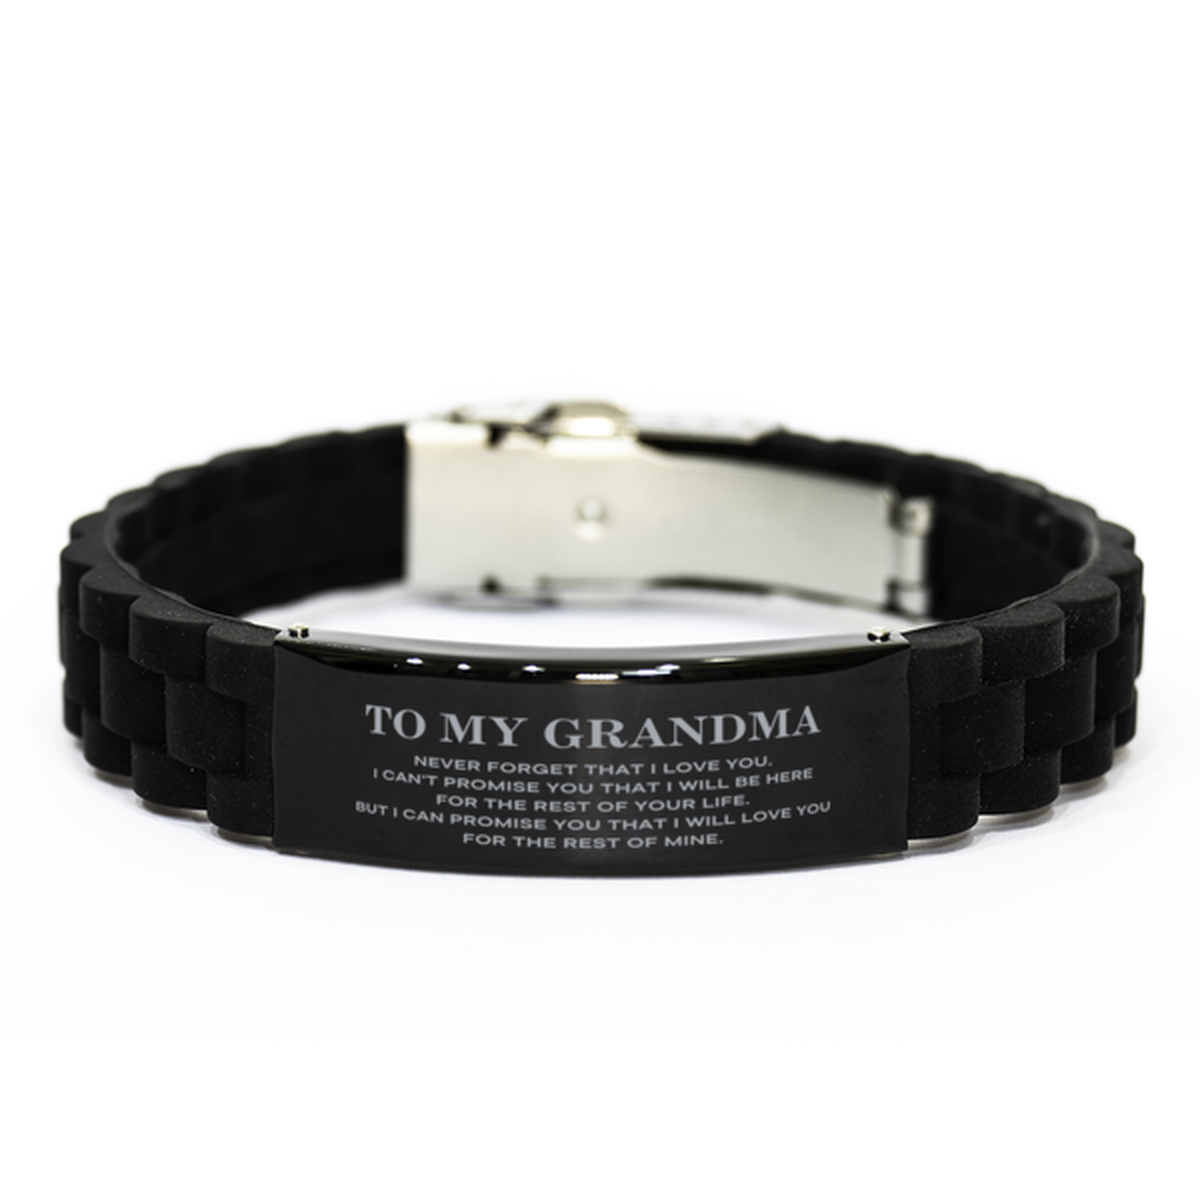 To My Grandma Gifts, I will love you for the rest of mine, Love Grandma Bracelet, Birthday Christmas Unique Black Glidelock Clasp Bracelet For Grandma